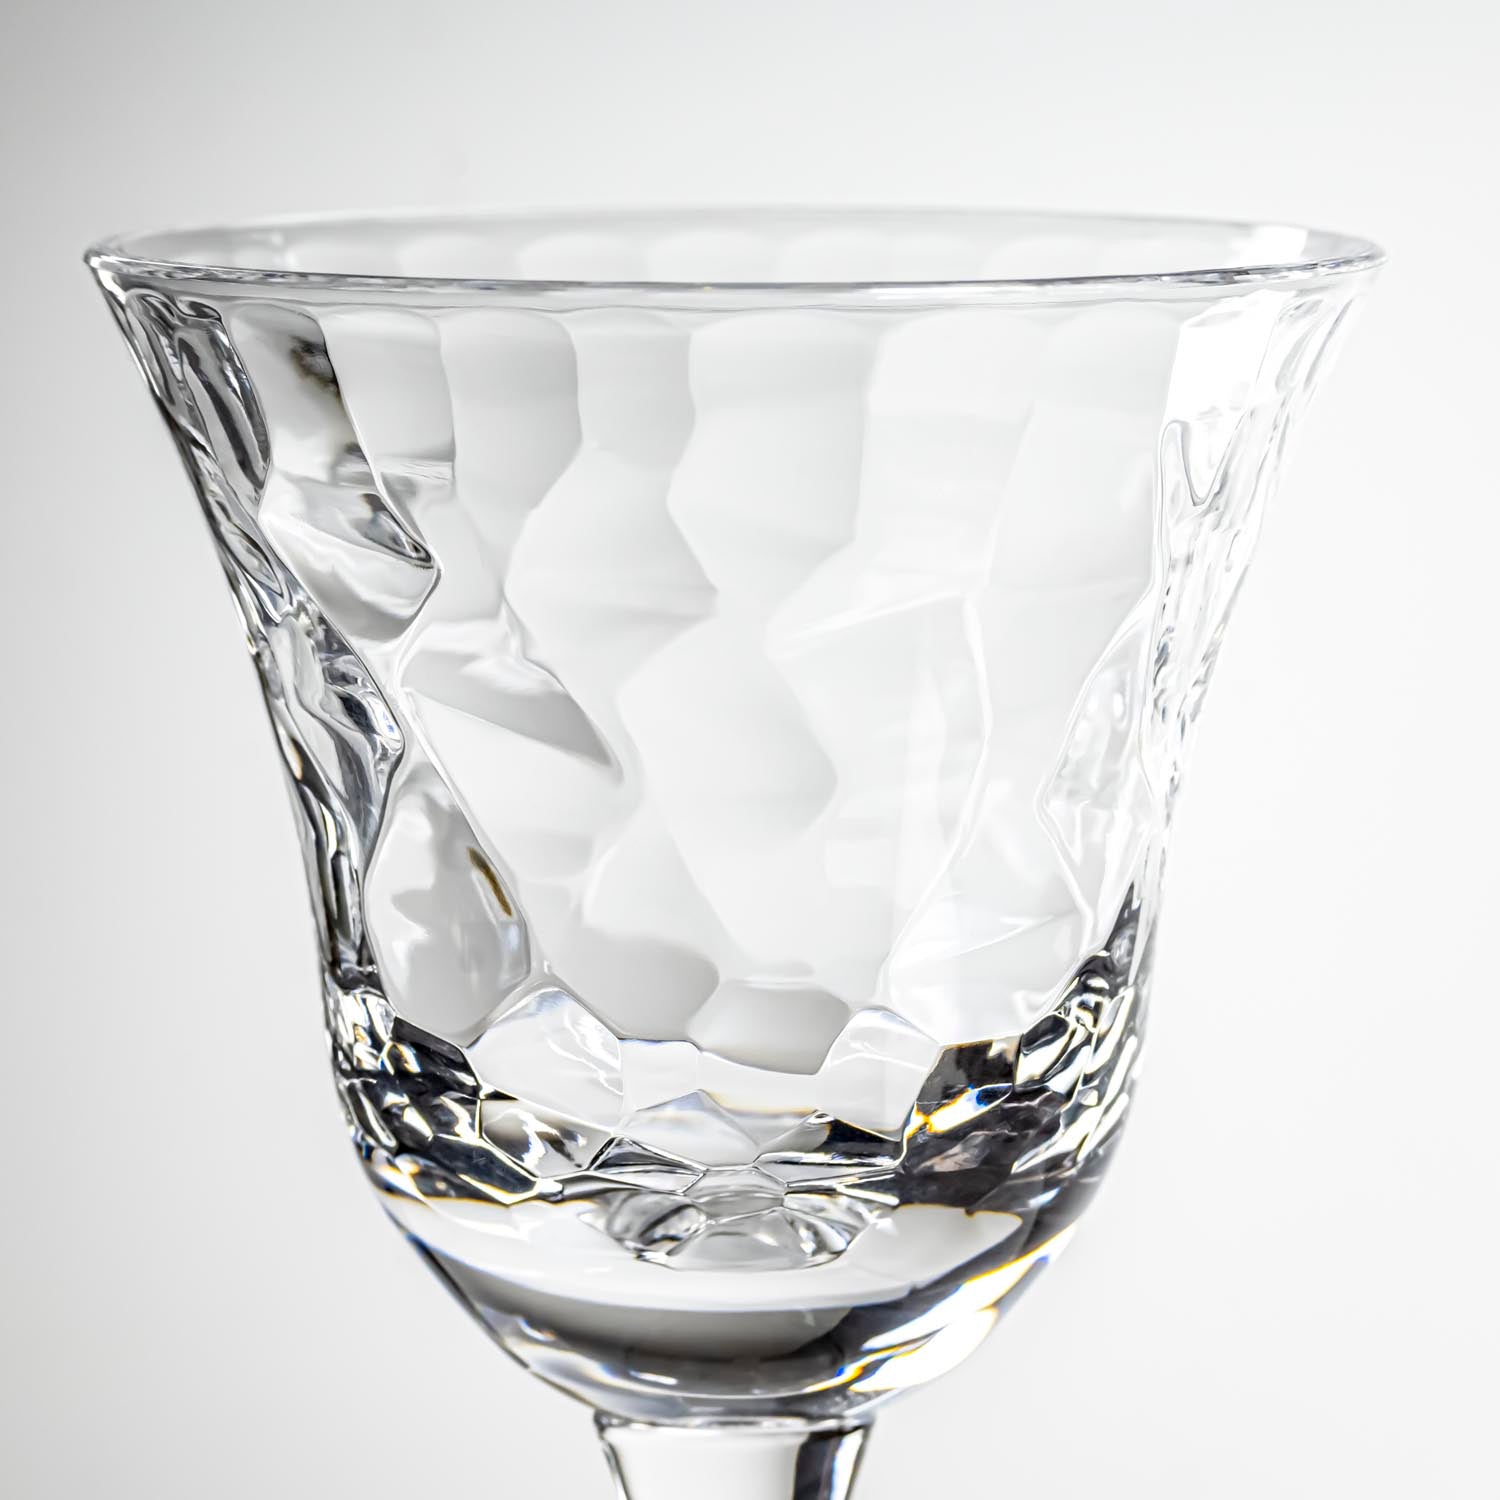 Merritt Designs Cascade Clear 12oz Acrylic Wine Stemware detailed view on white background